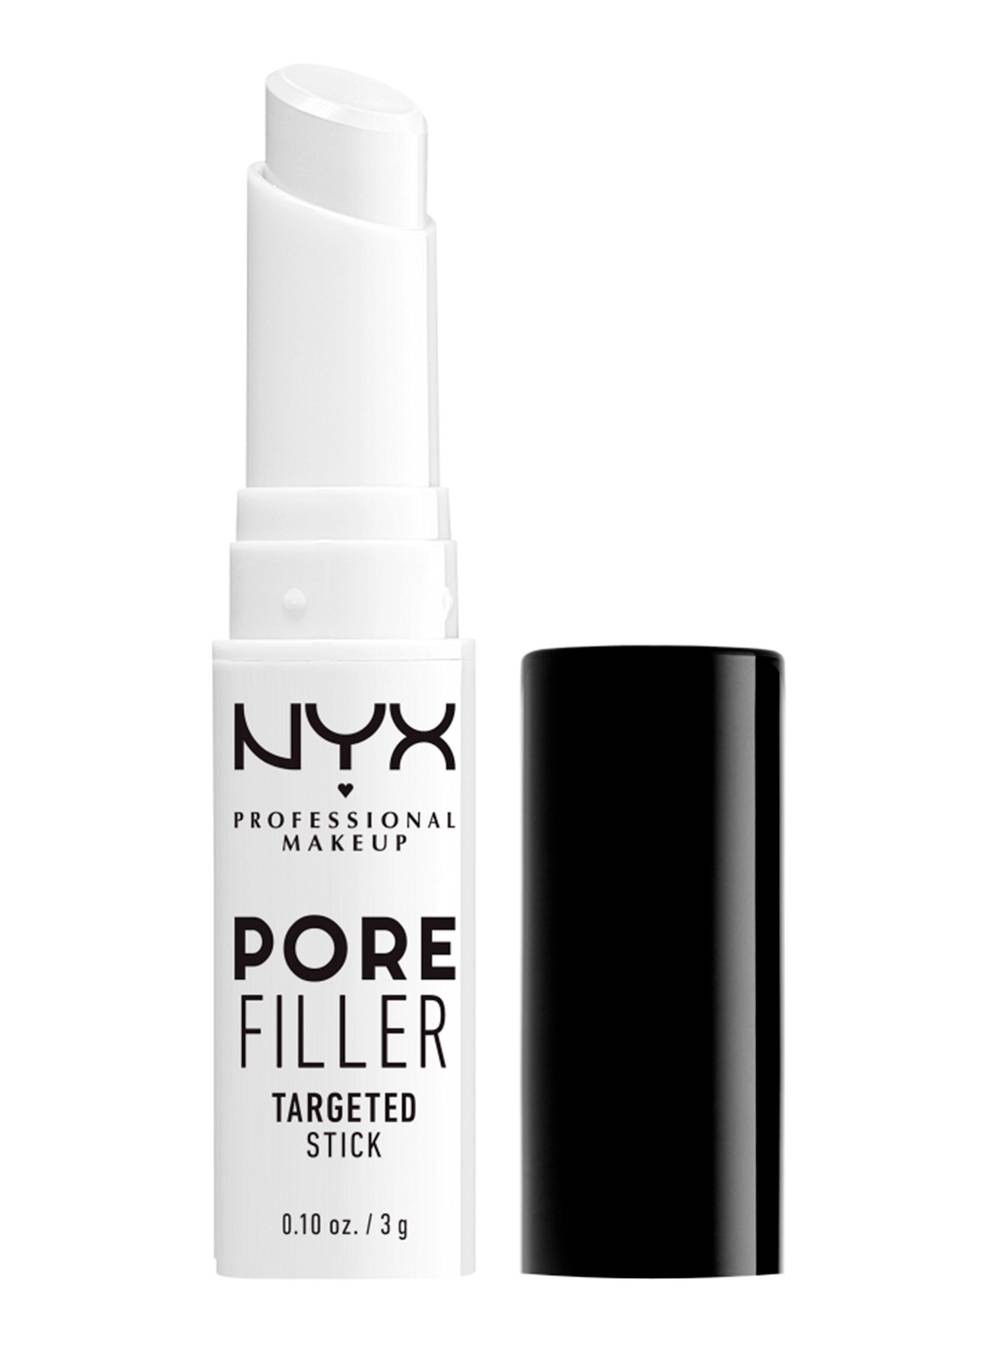 Nyx professional makeup prebase pore filler primer (20 ml)